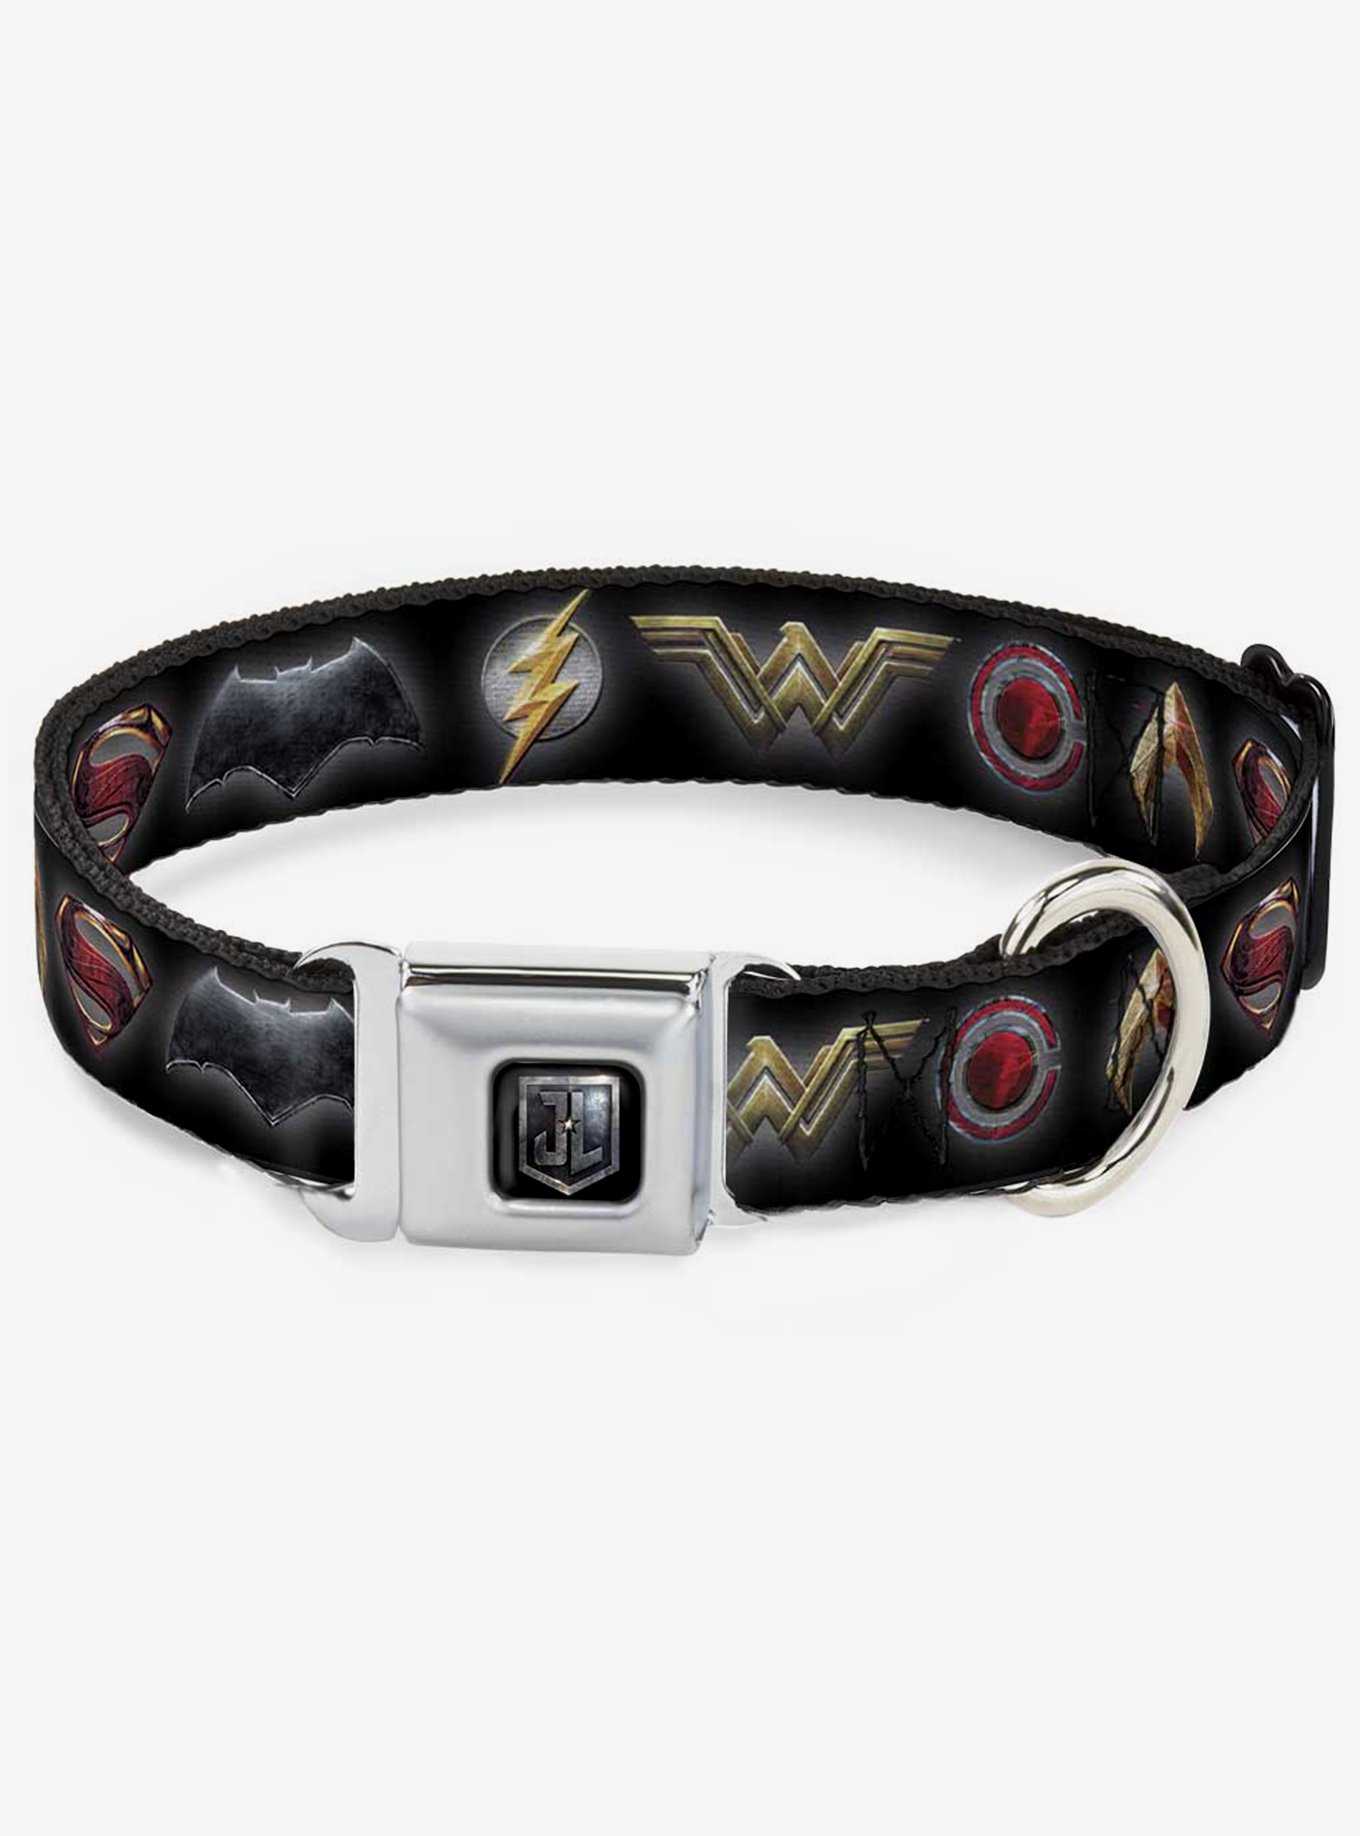 DC Comics Justice League 2017 6 Superhero Icons Seatbelt Buckle Dog Collar, , hi-res